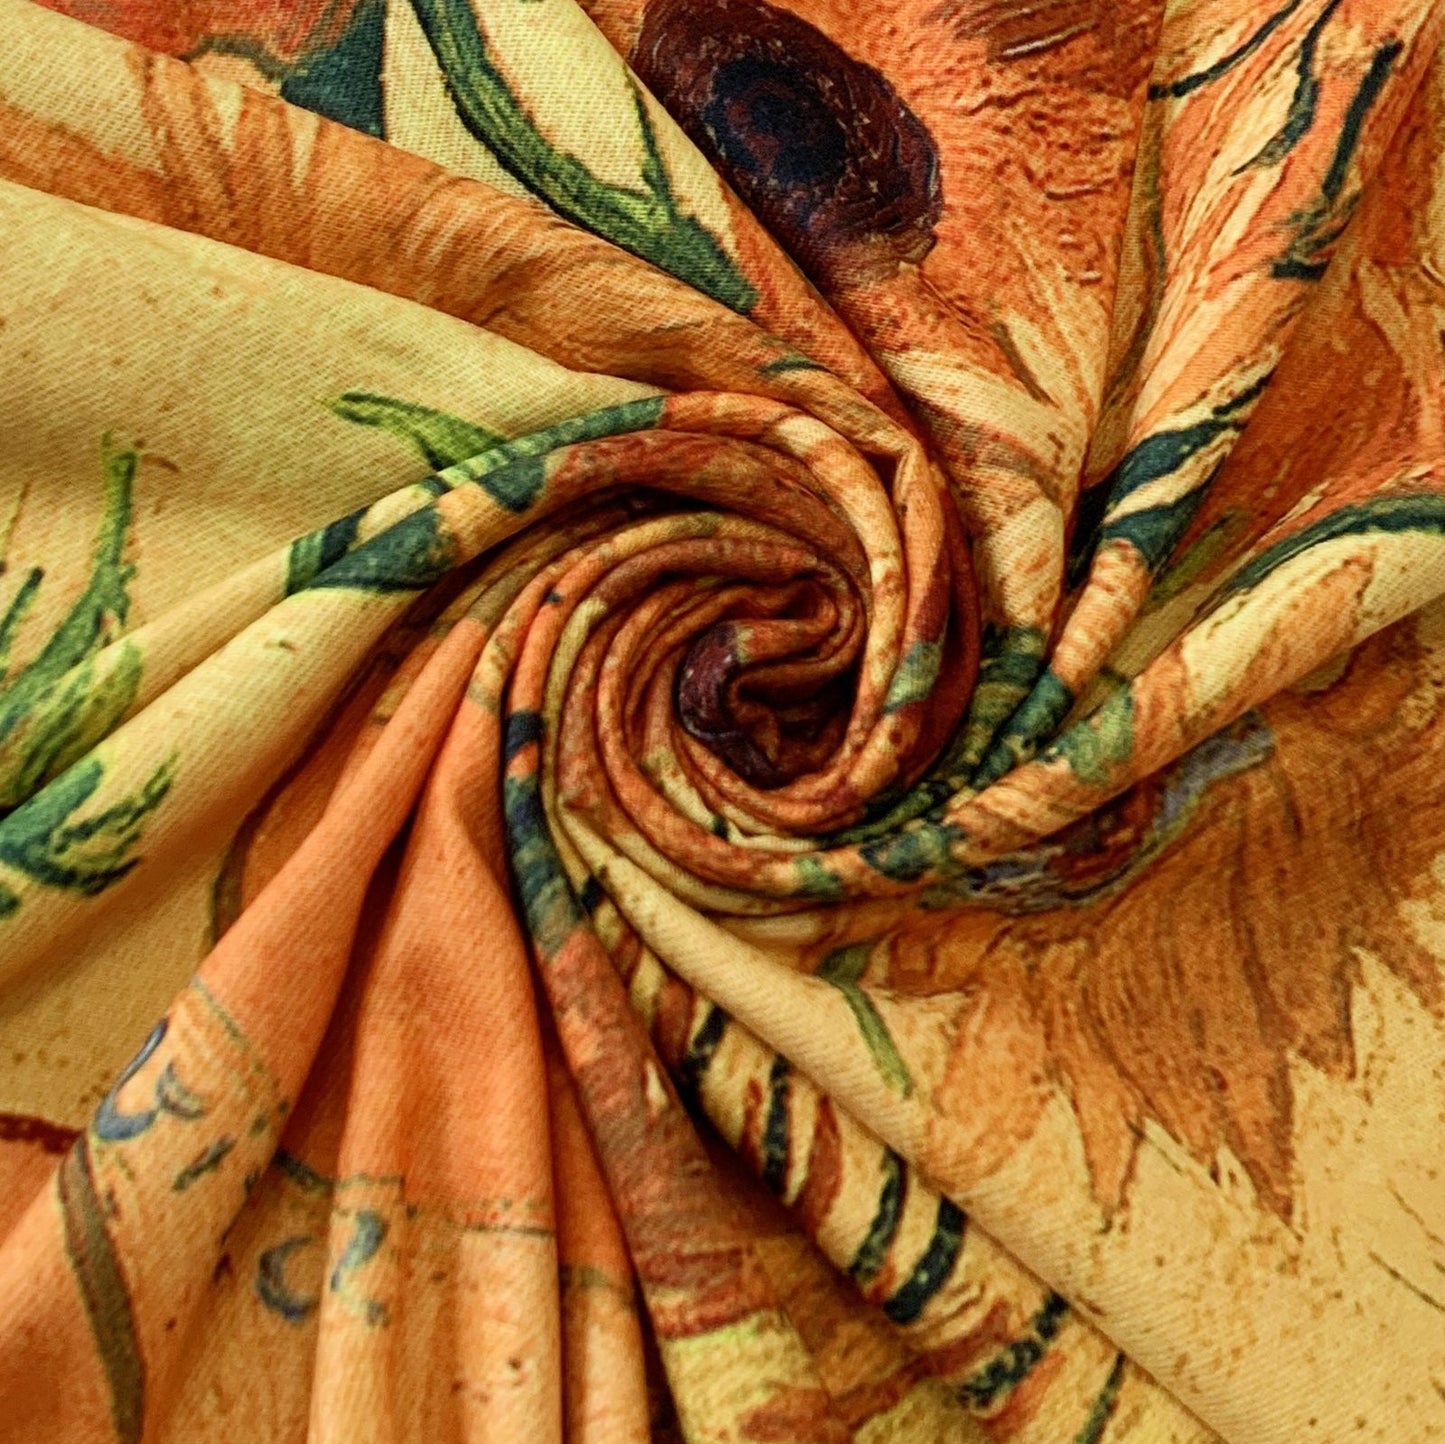 Vlnený šál-šatka, 70 cm x 180 cm, Van Gogh - Sunflowers